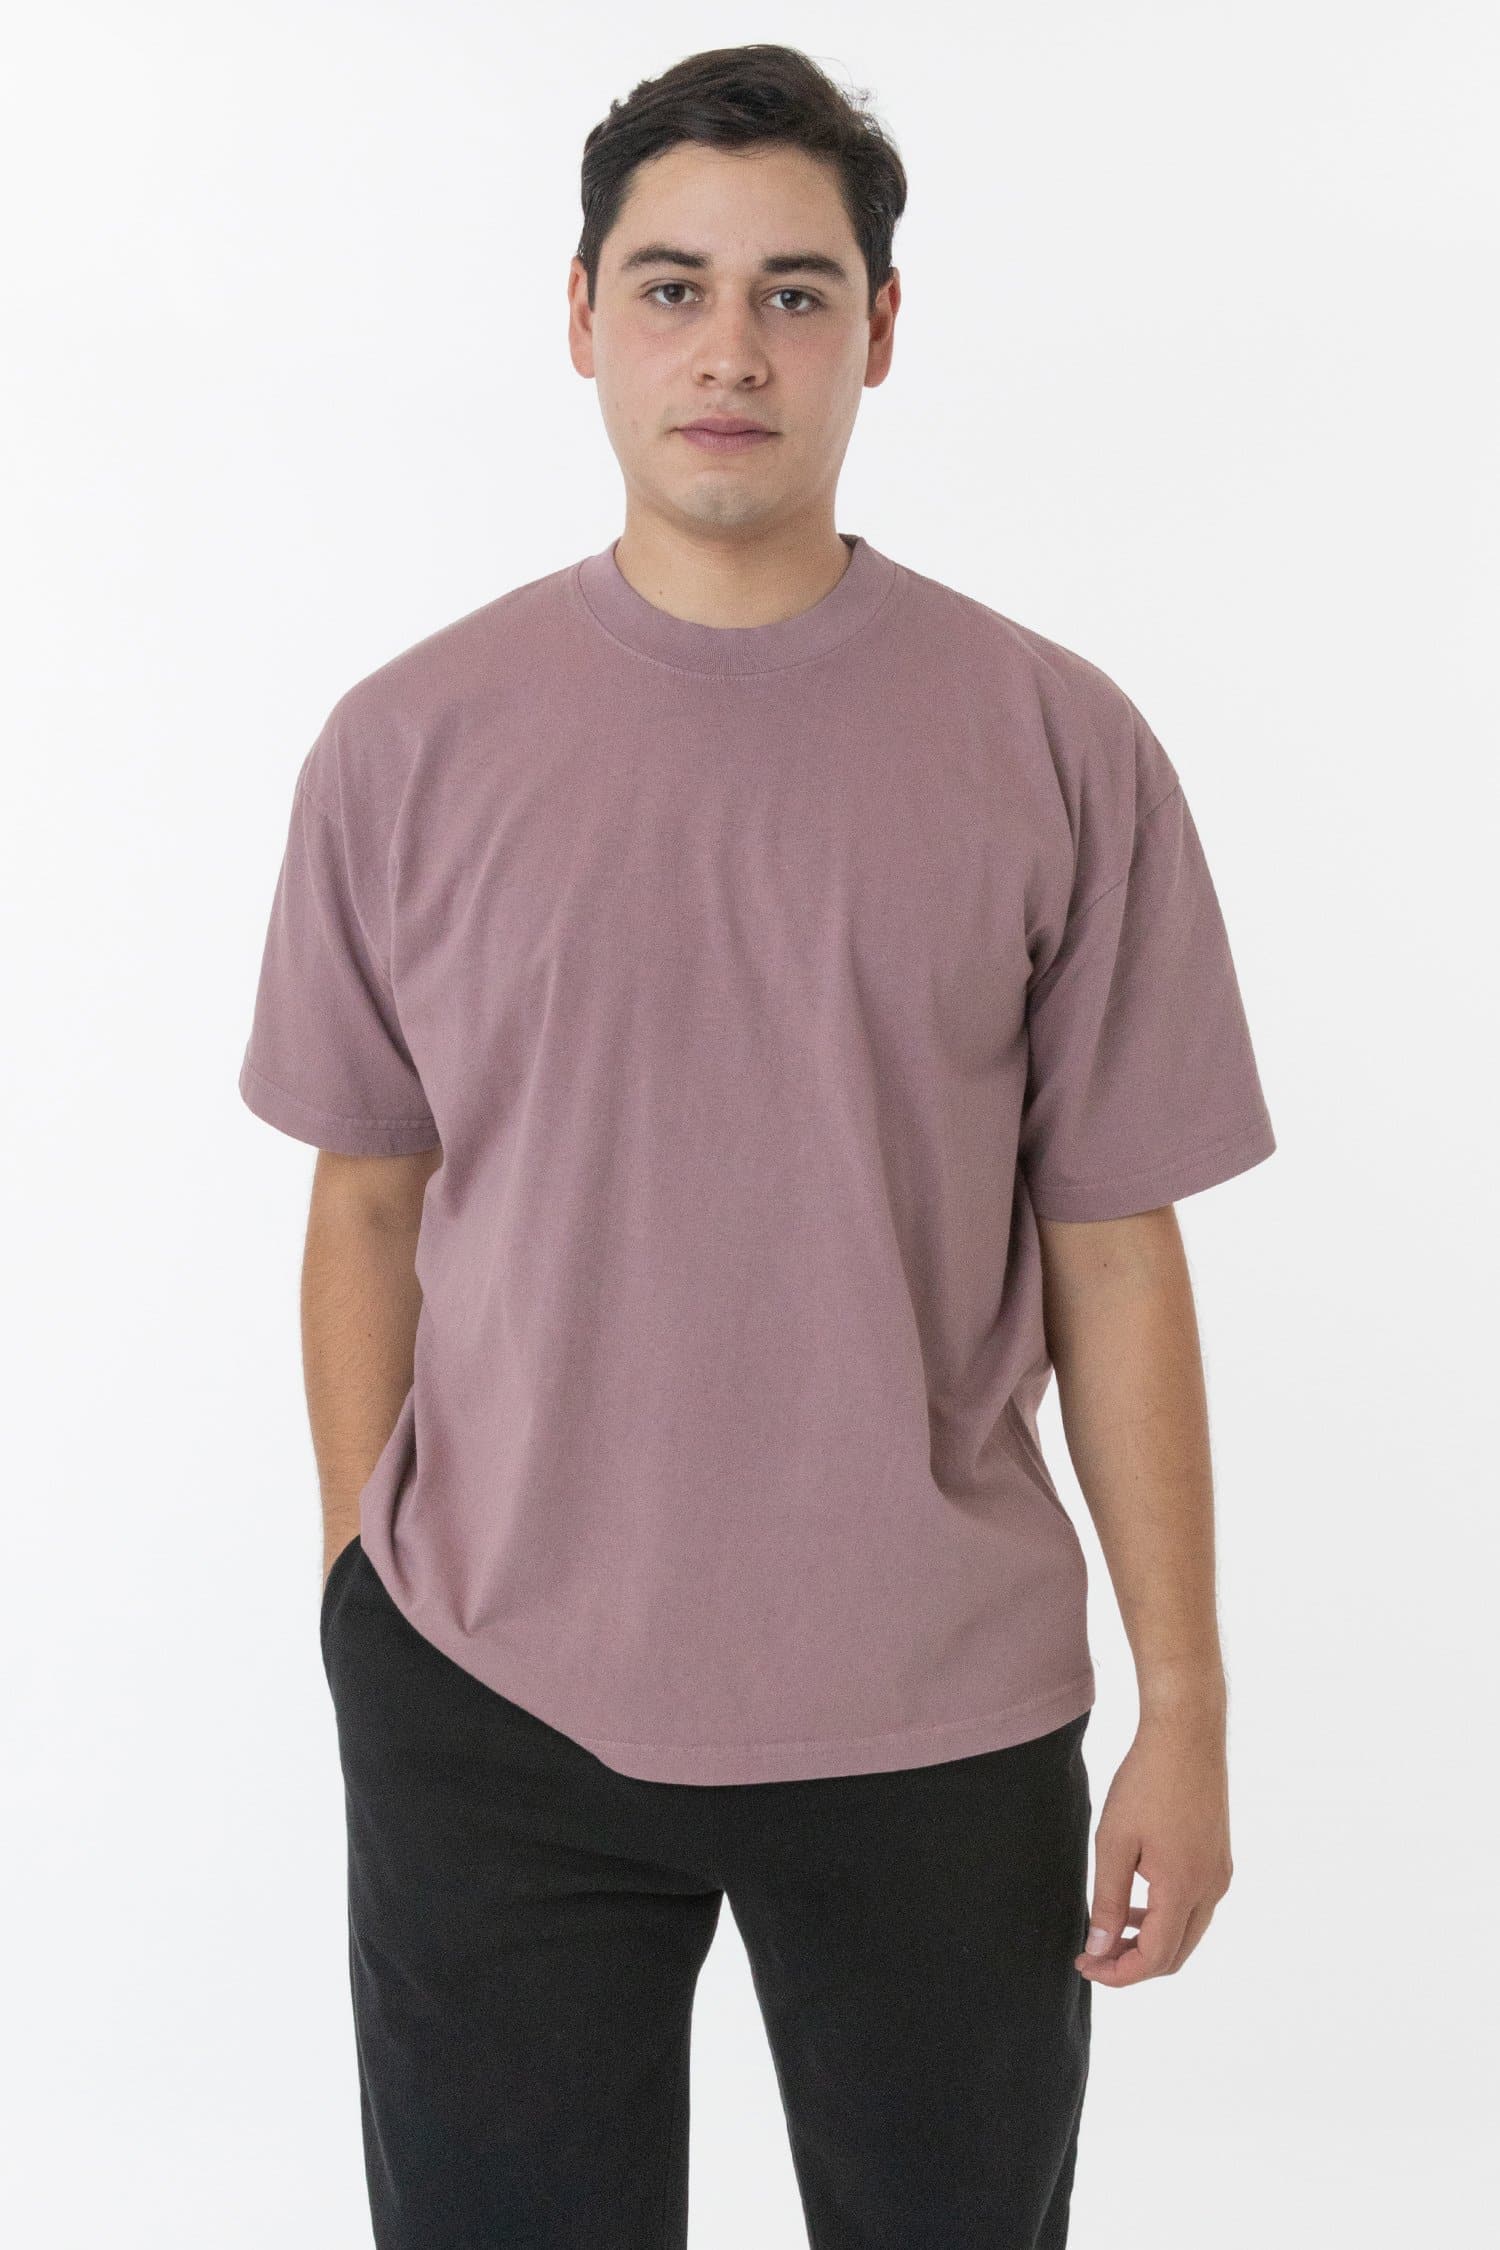 Los Angeles Apparel S/S T-shirts 1801GD Garment Dye Crew Neck 6.5oz Dark Silver